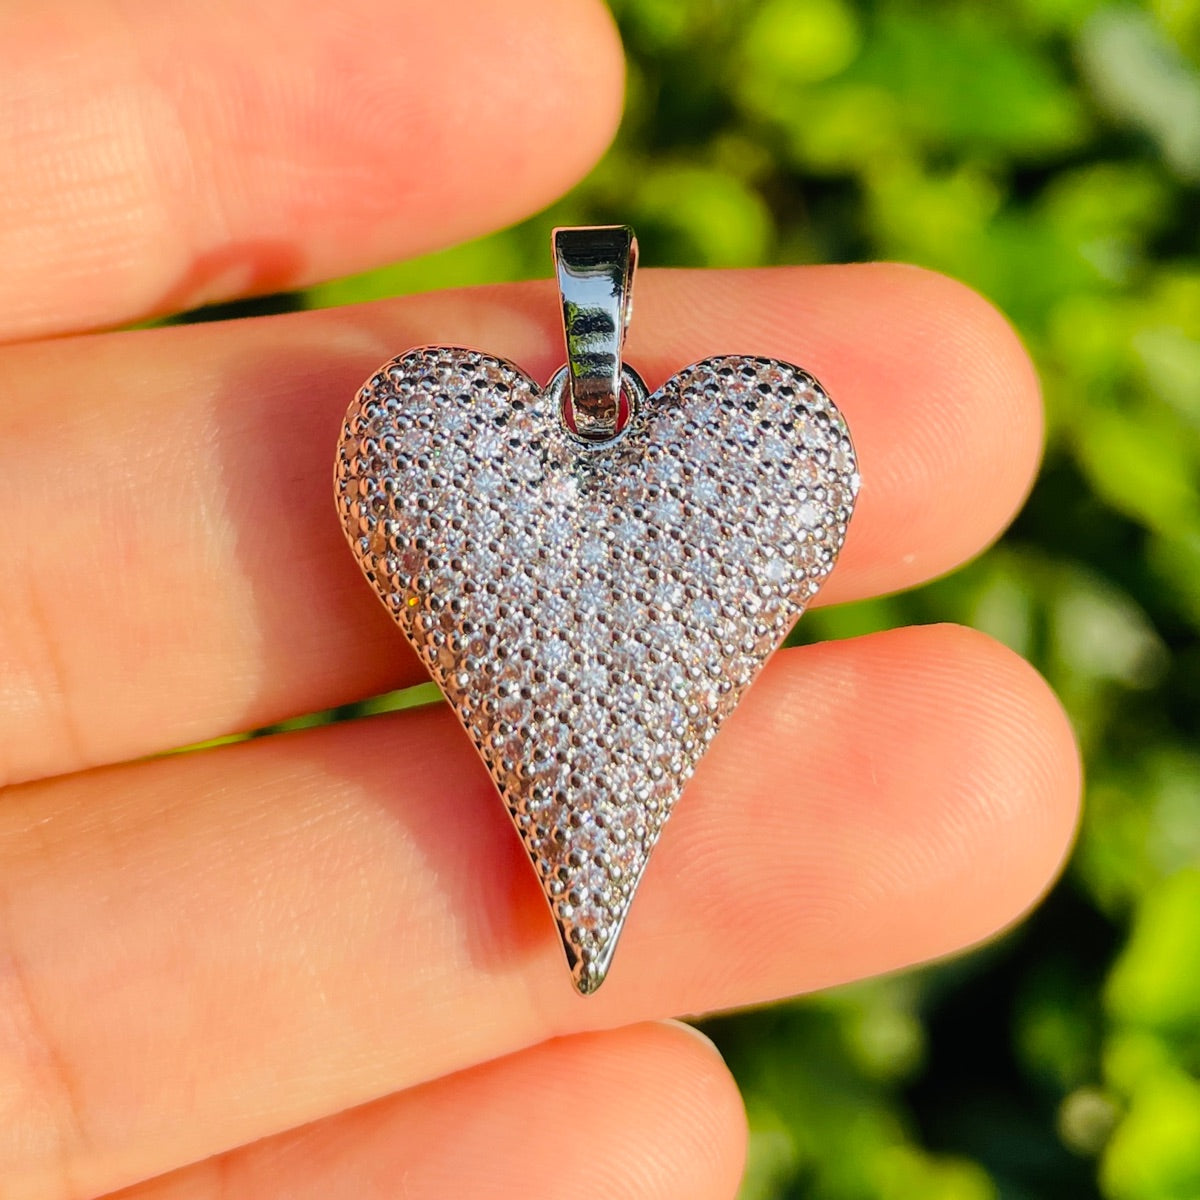 10pcs/lot CZ Paved 3D Heart Charm Pendants CZ Paved Charms Hearts New Charms Arrivals Charms Beads Beyond